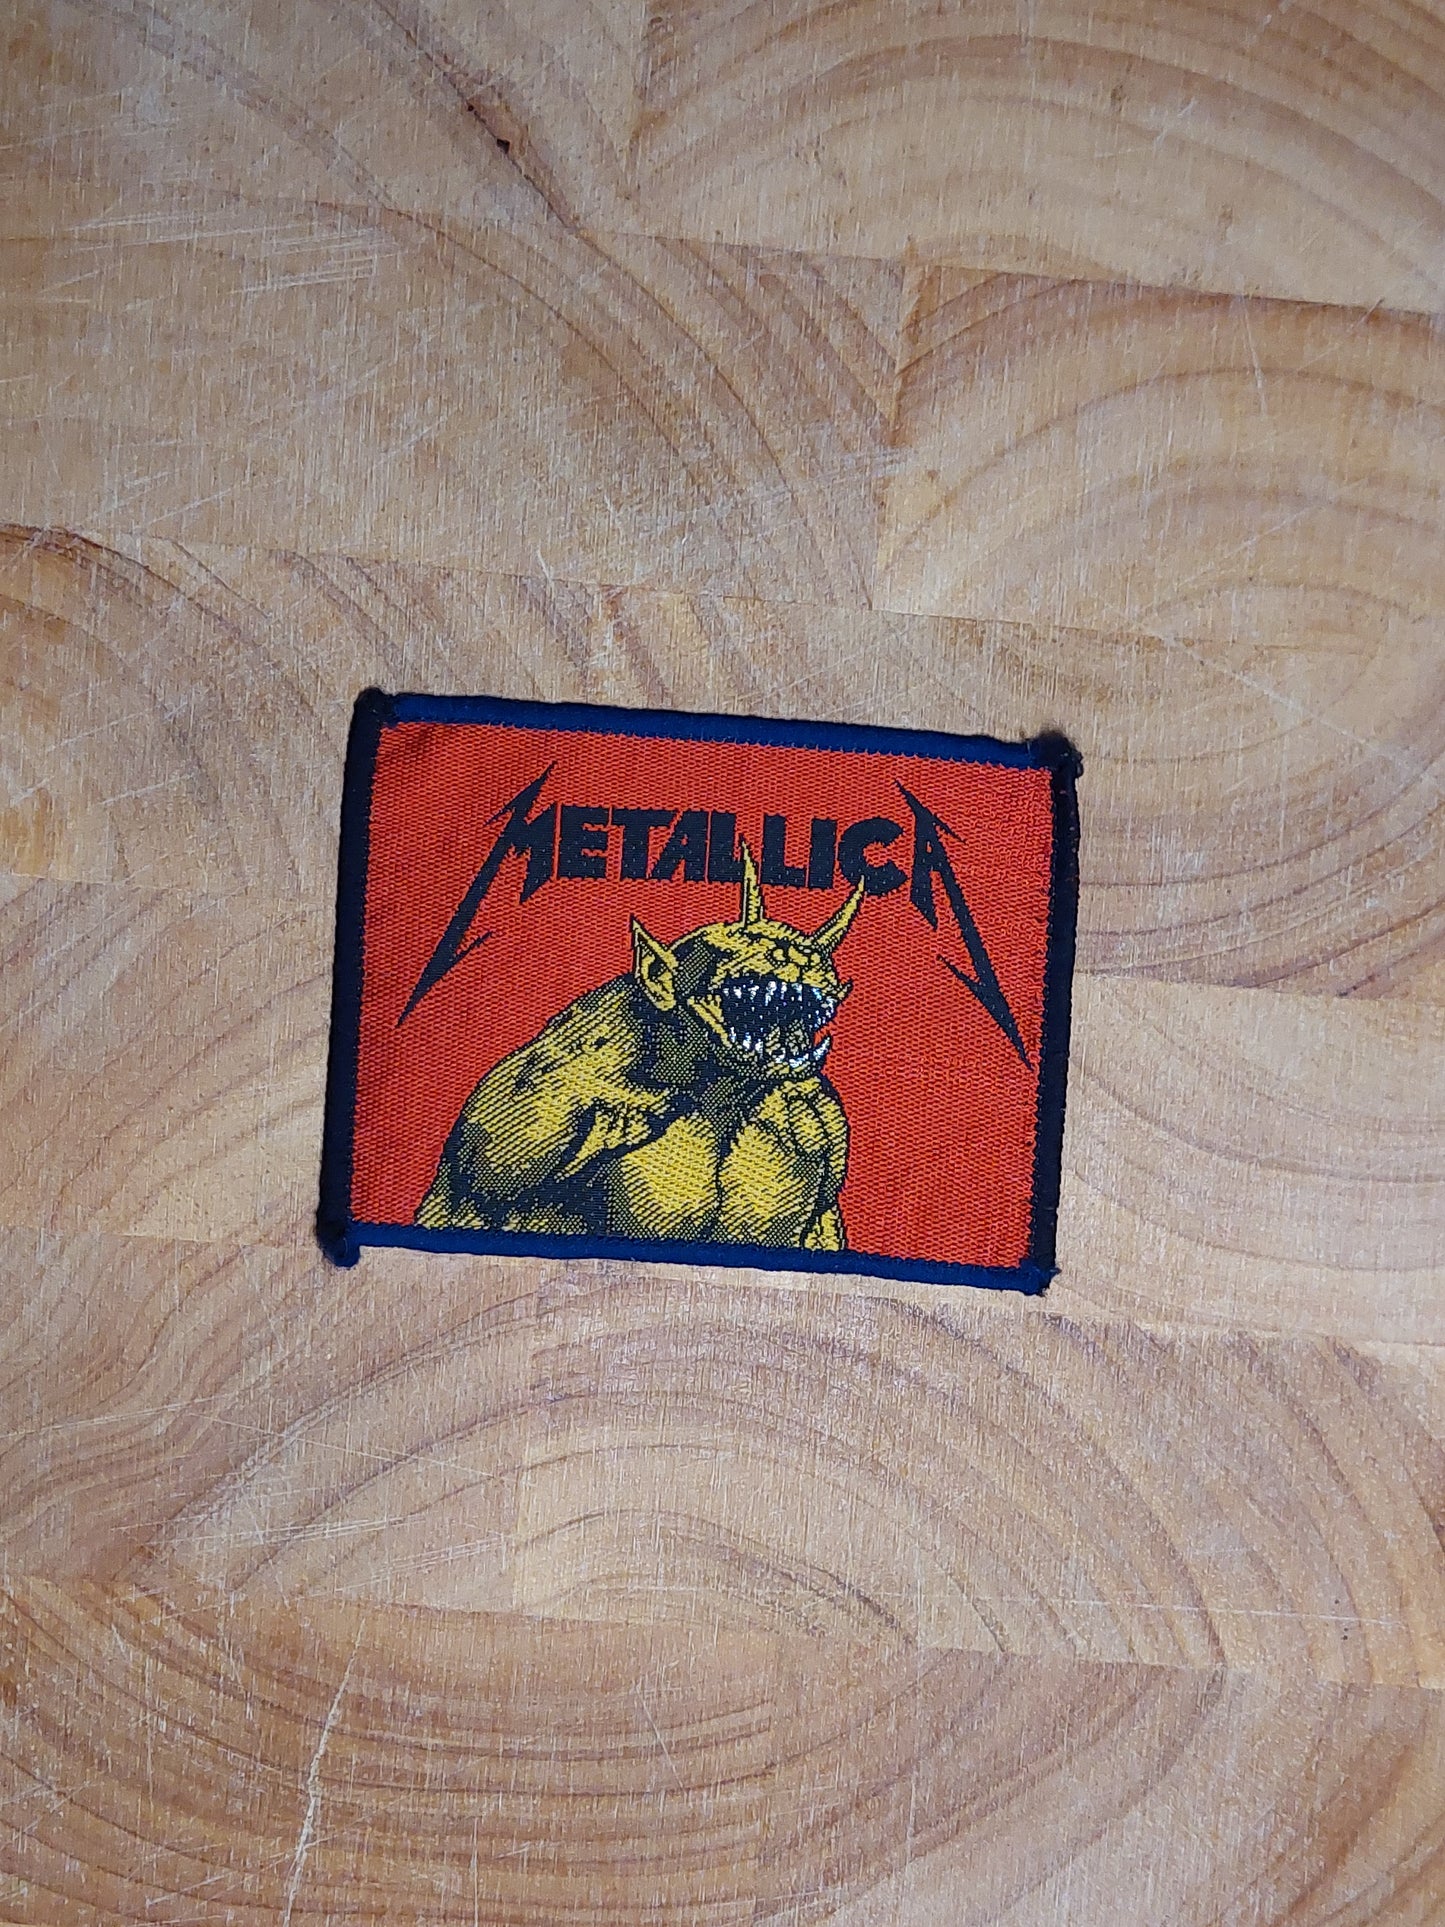 Metallica jump in the fire blue border